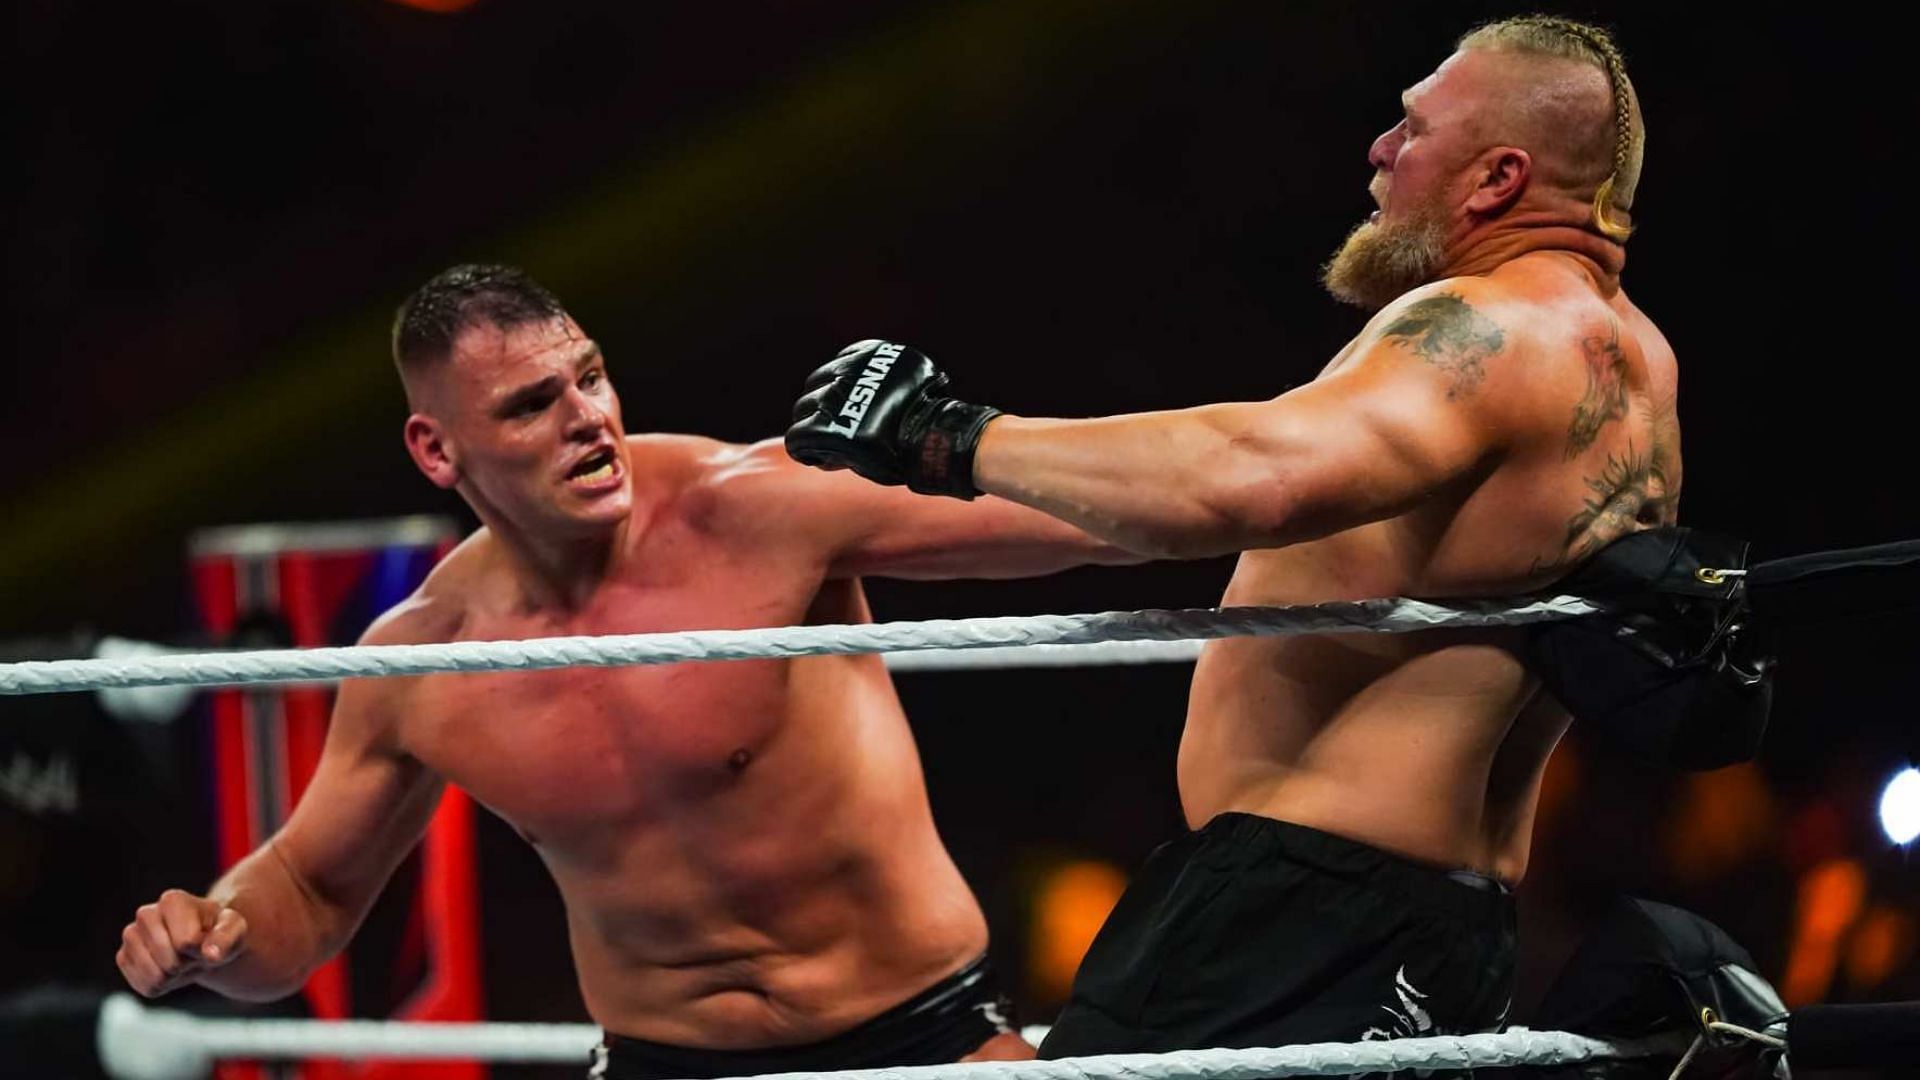 Brock Lesnar vs. Gunther will be a never-before-seen WWE match